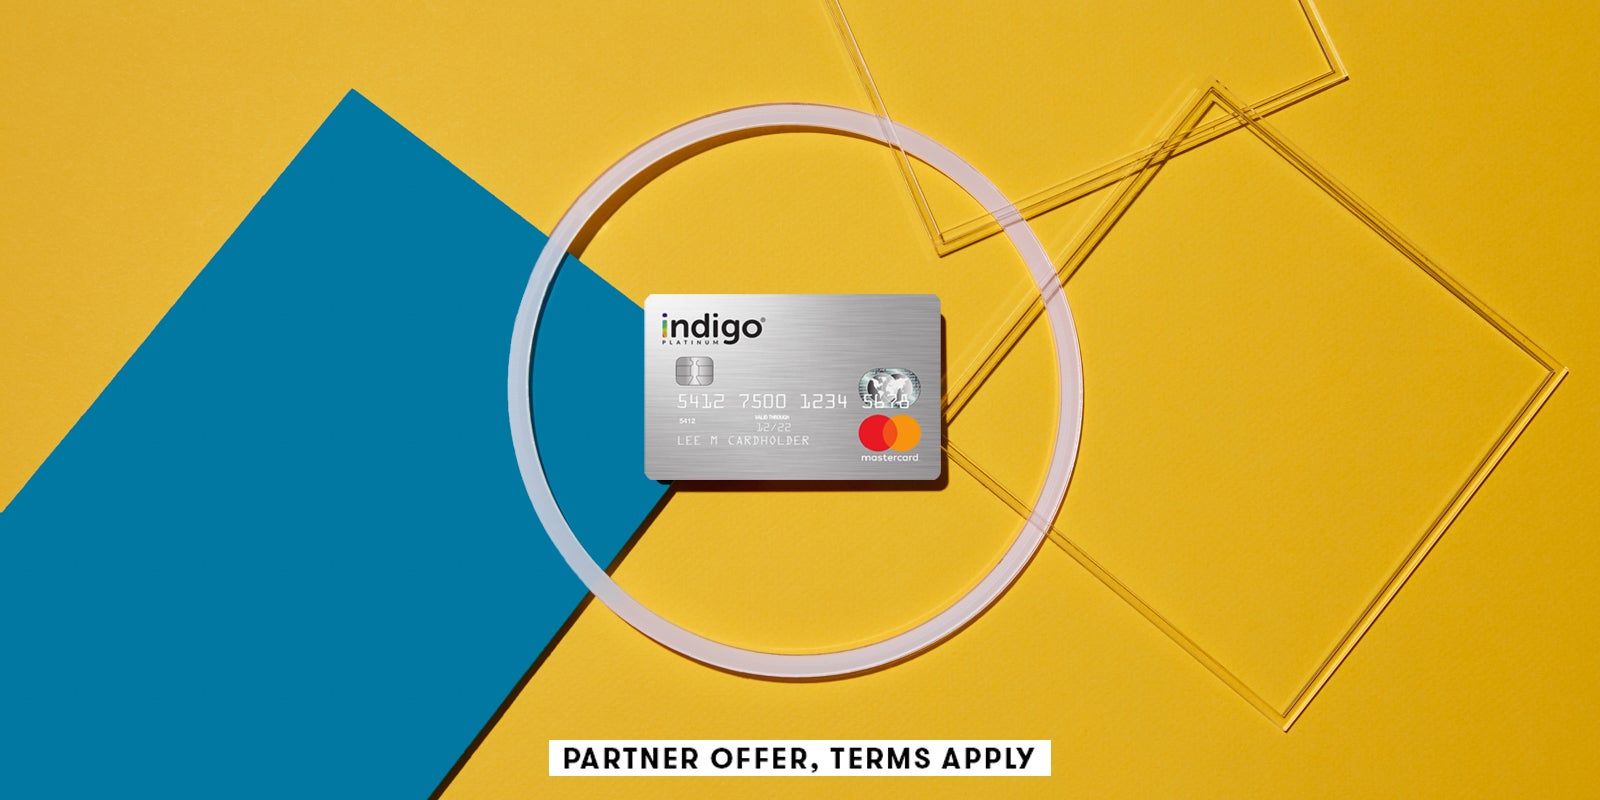 Indigo Credit Card Application / Bank of America Credit